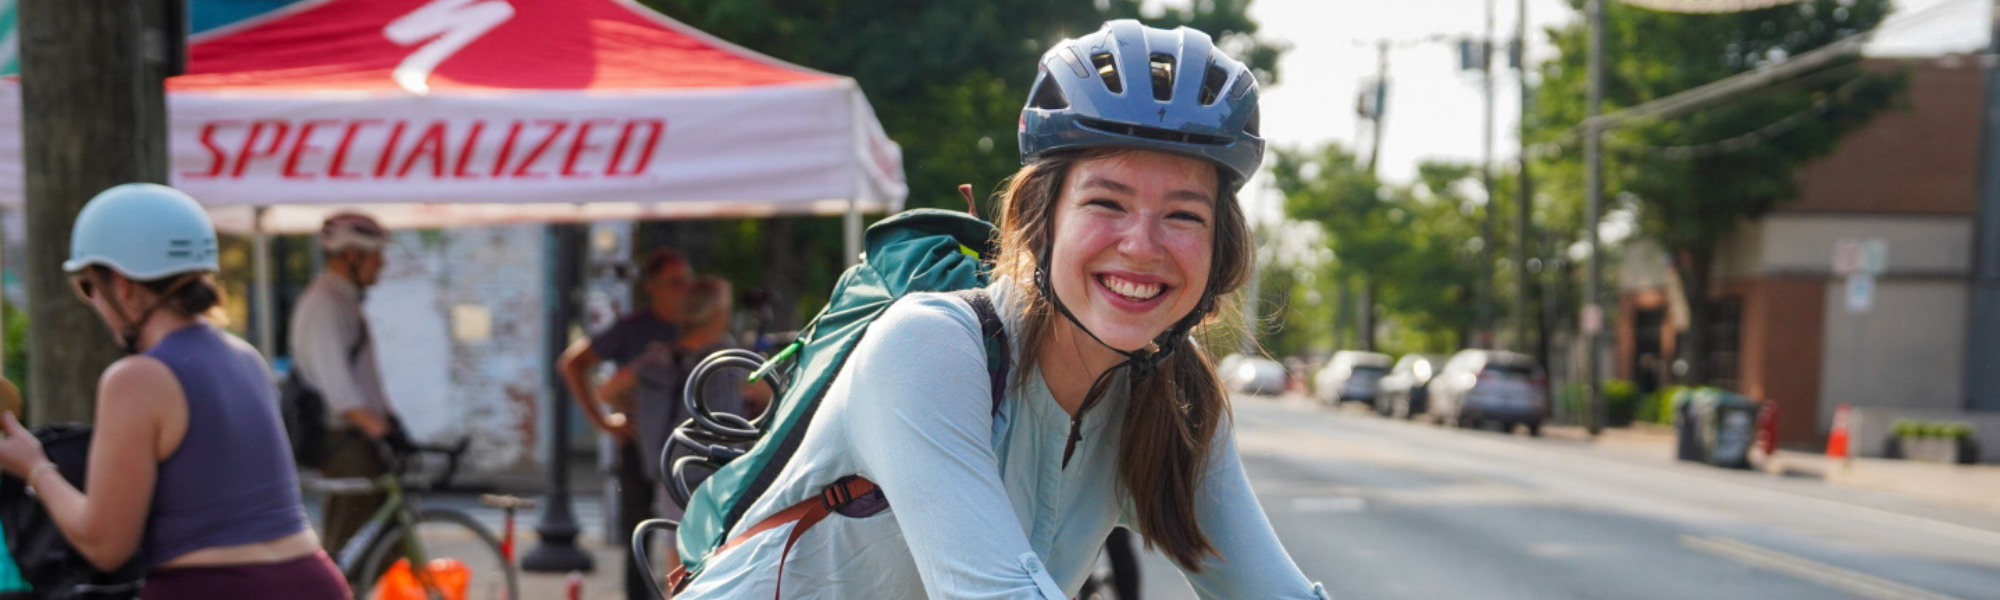 Bike commuter with helmet on smiling outside